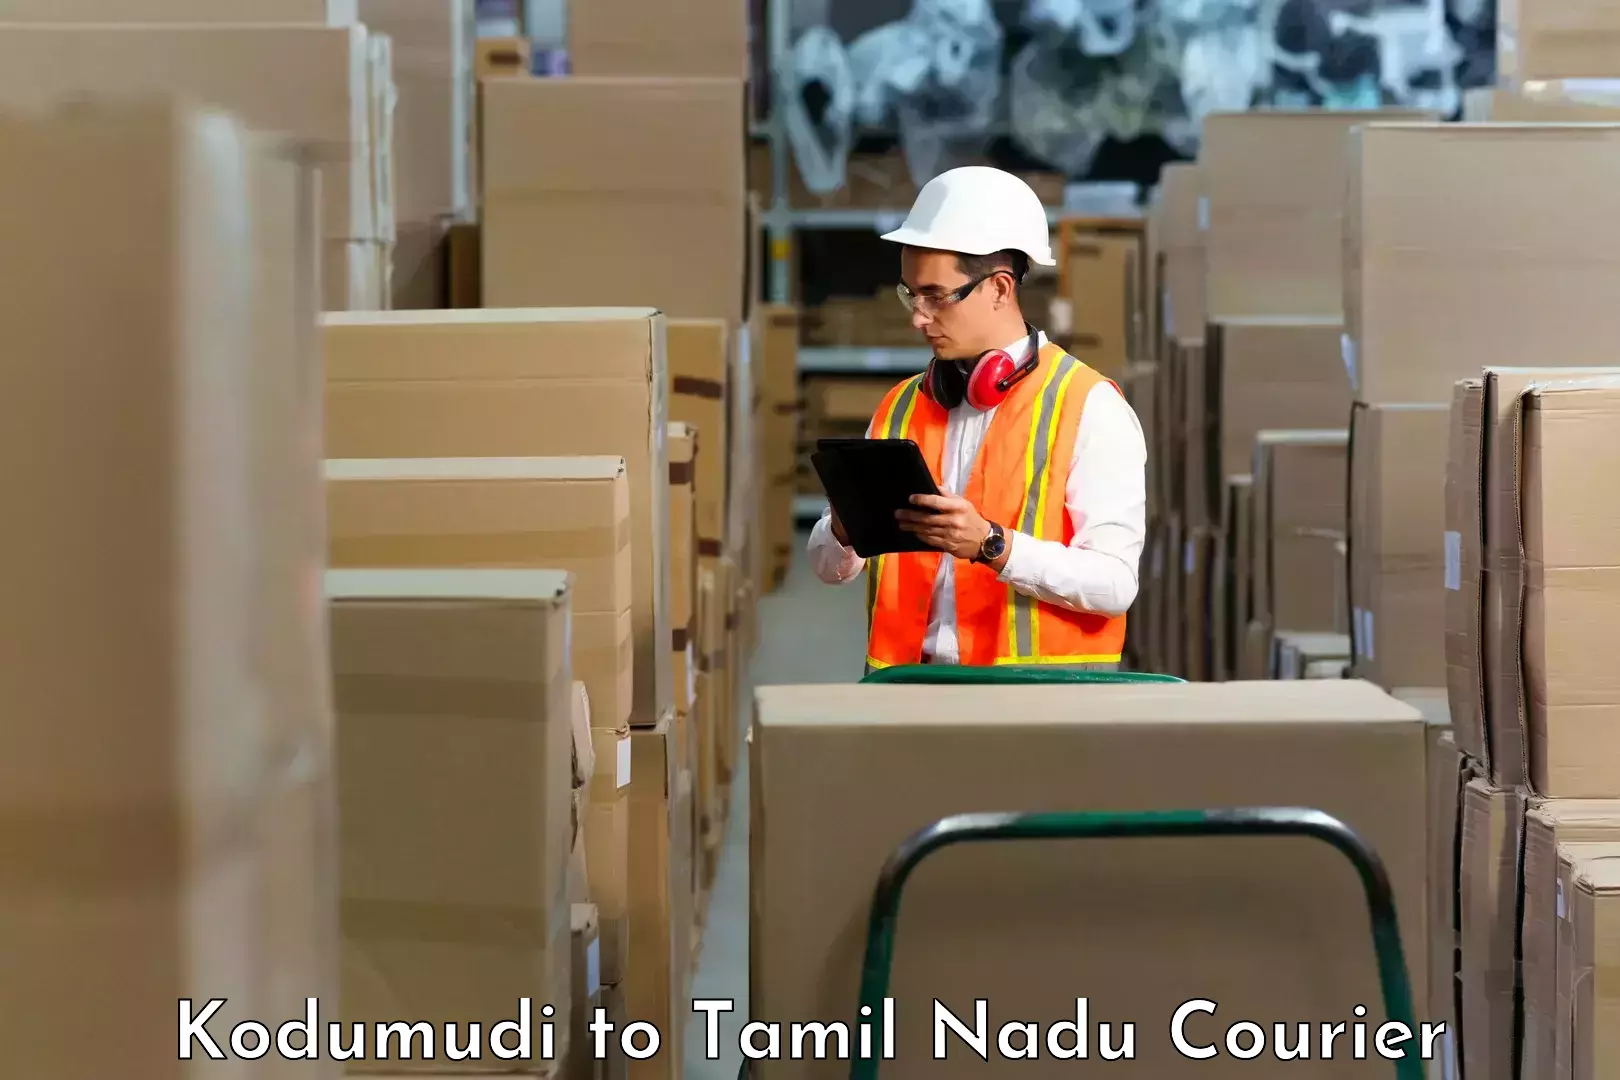 Flexible delivery schedules Kodumudi to Cuddalore